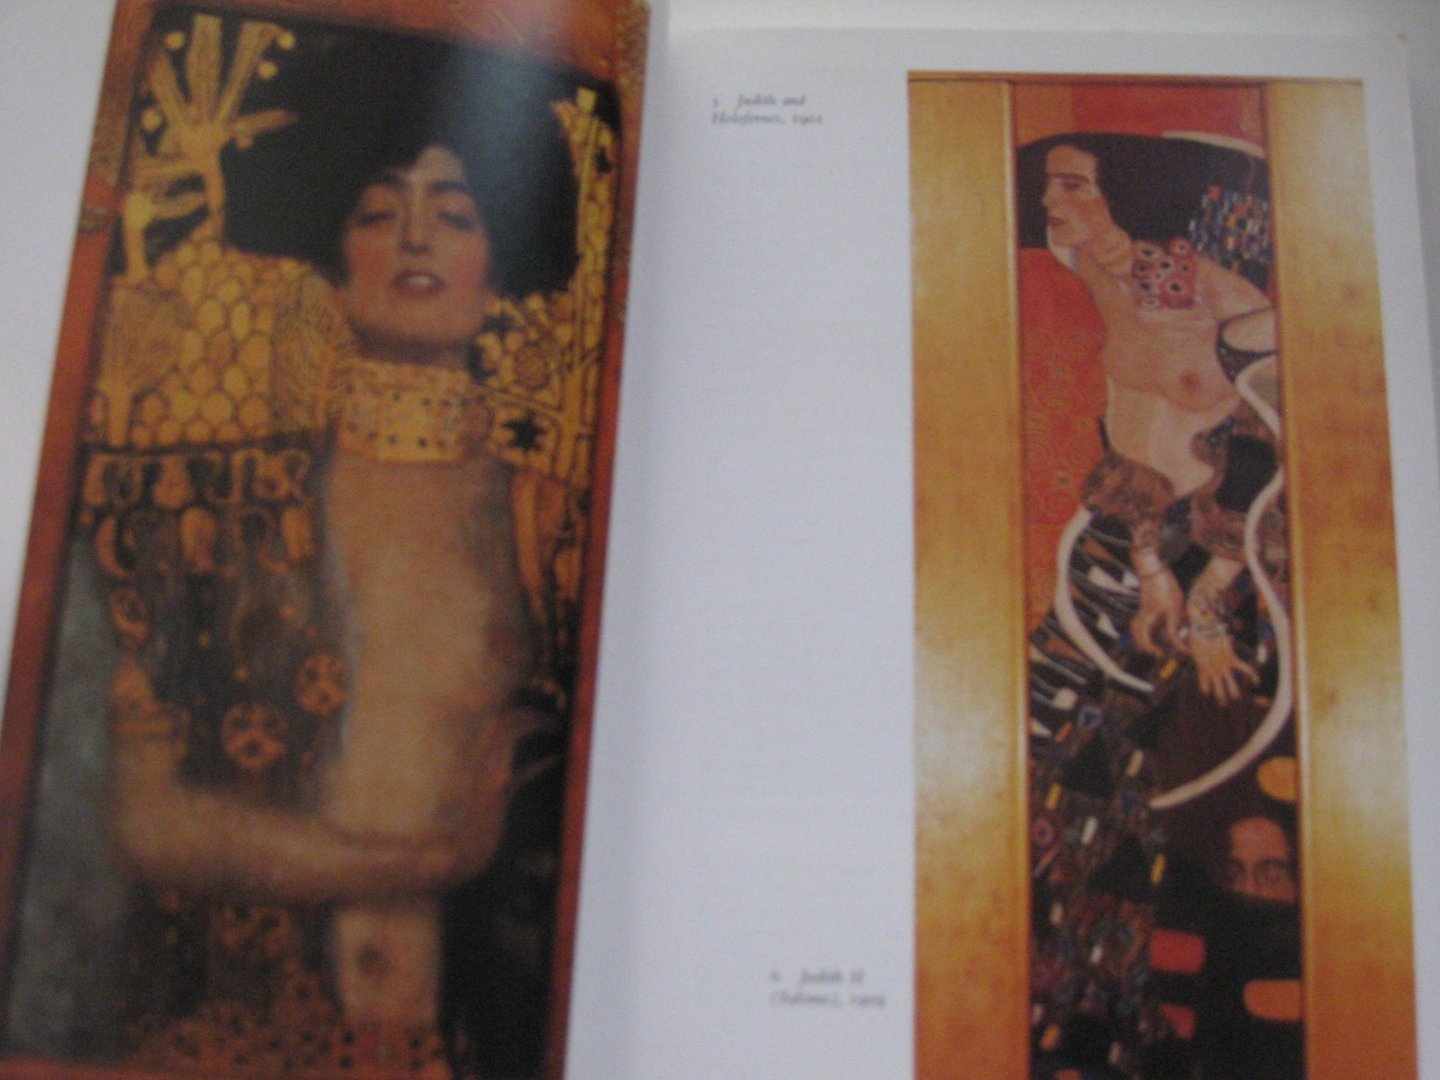 Whitford, Frank - Klimt